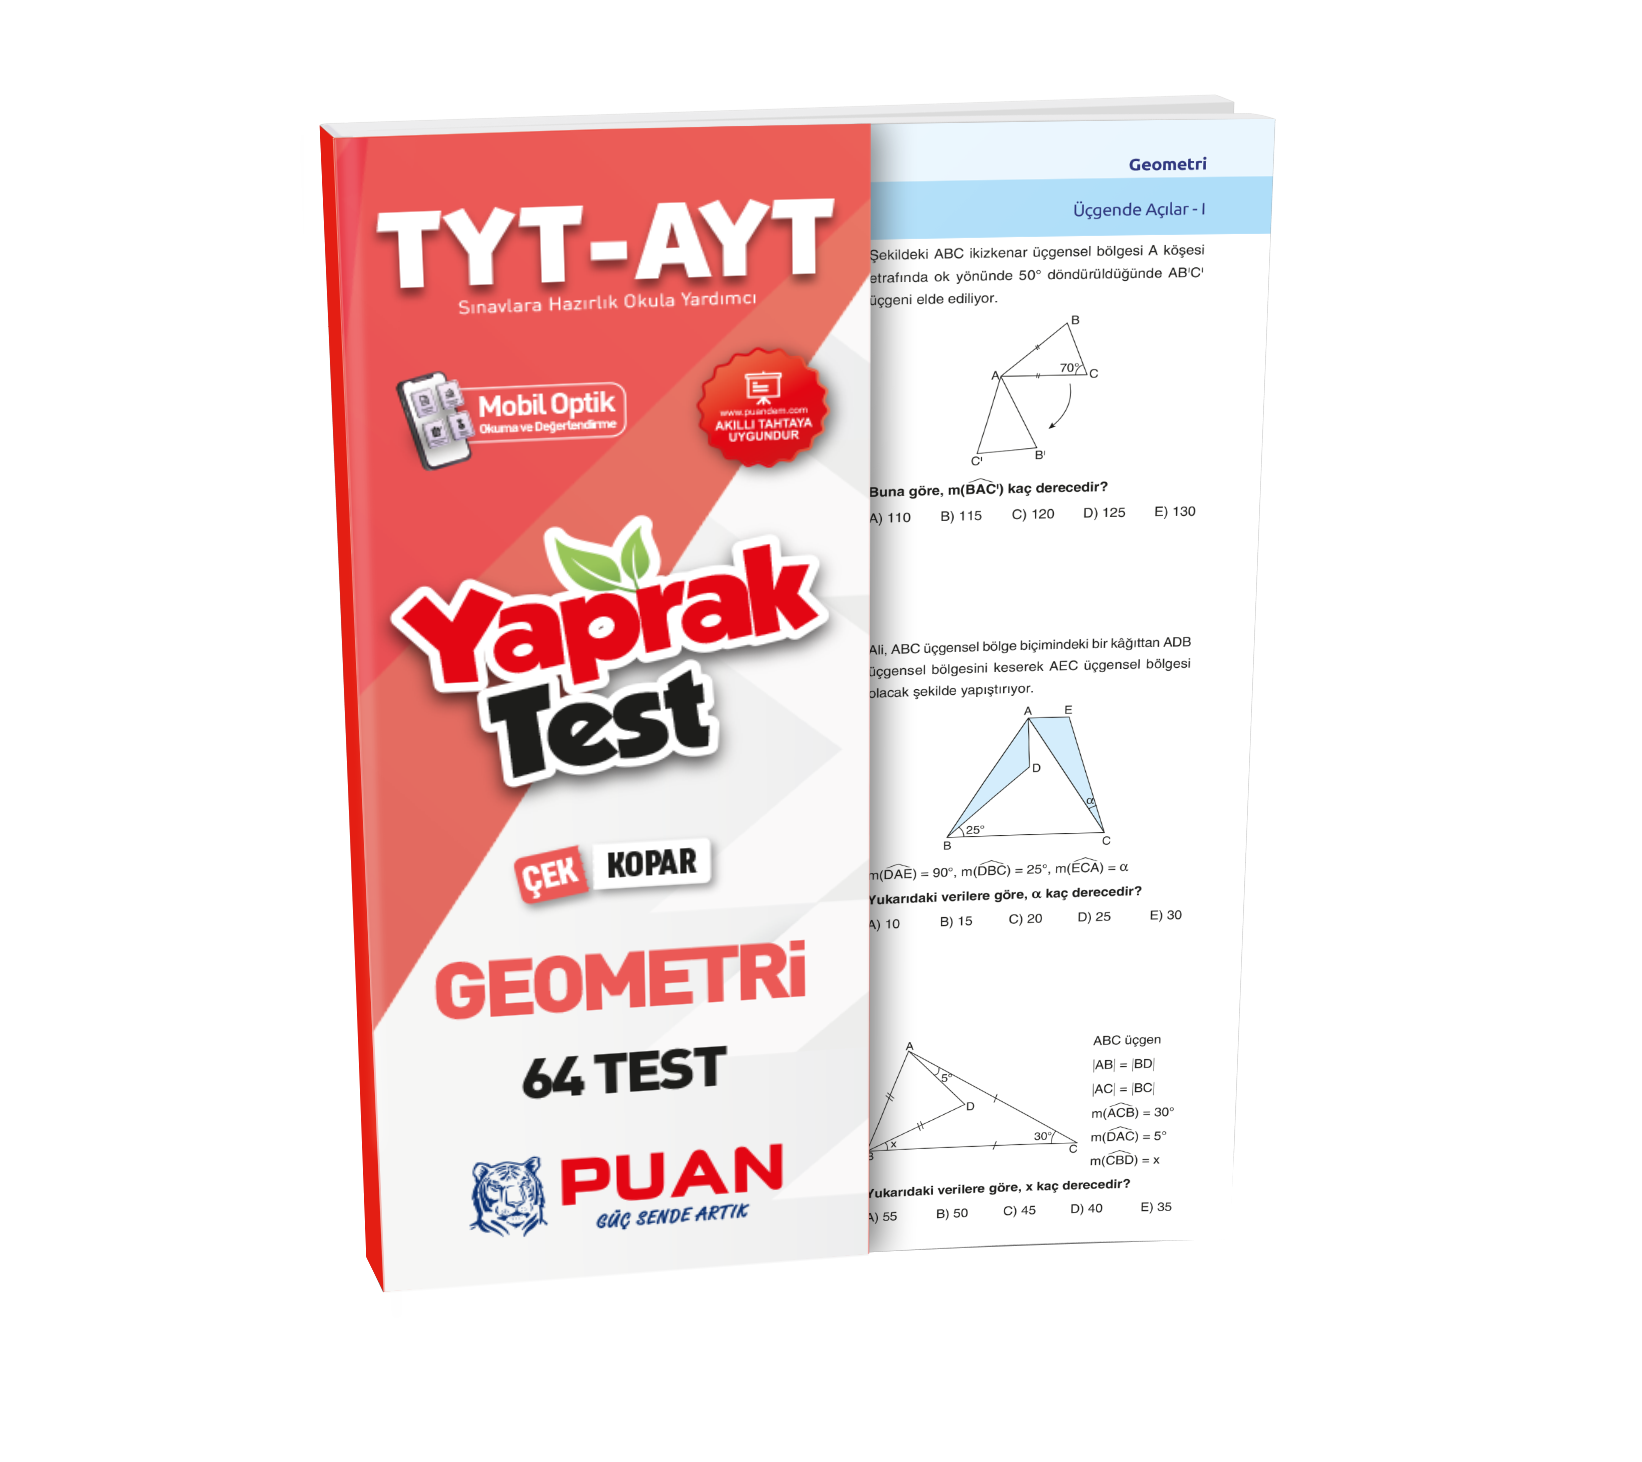 Puan Tyt-Ayt Puan Geometri Yaprak Test